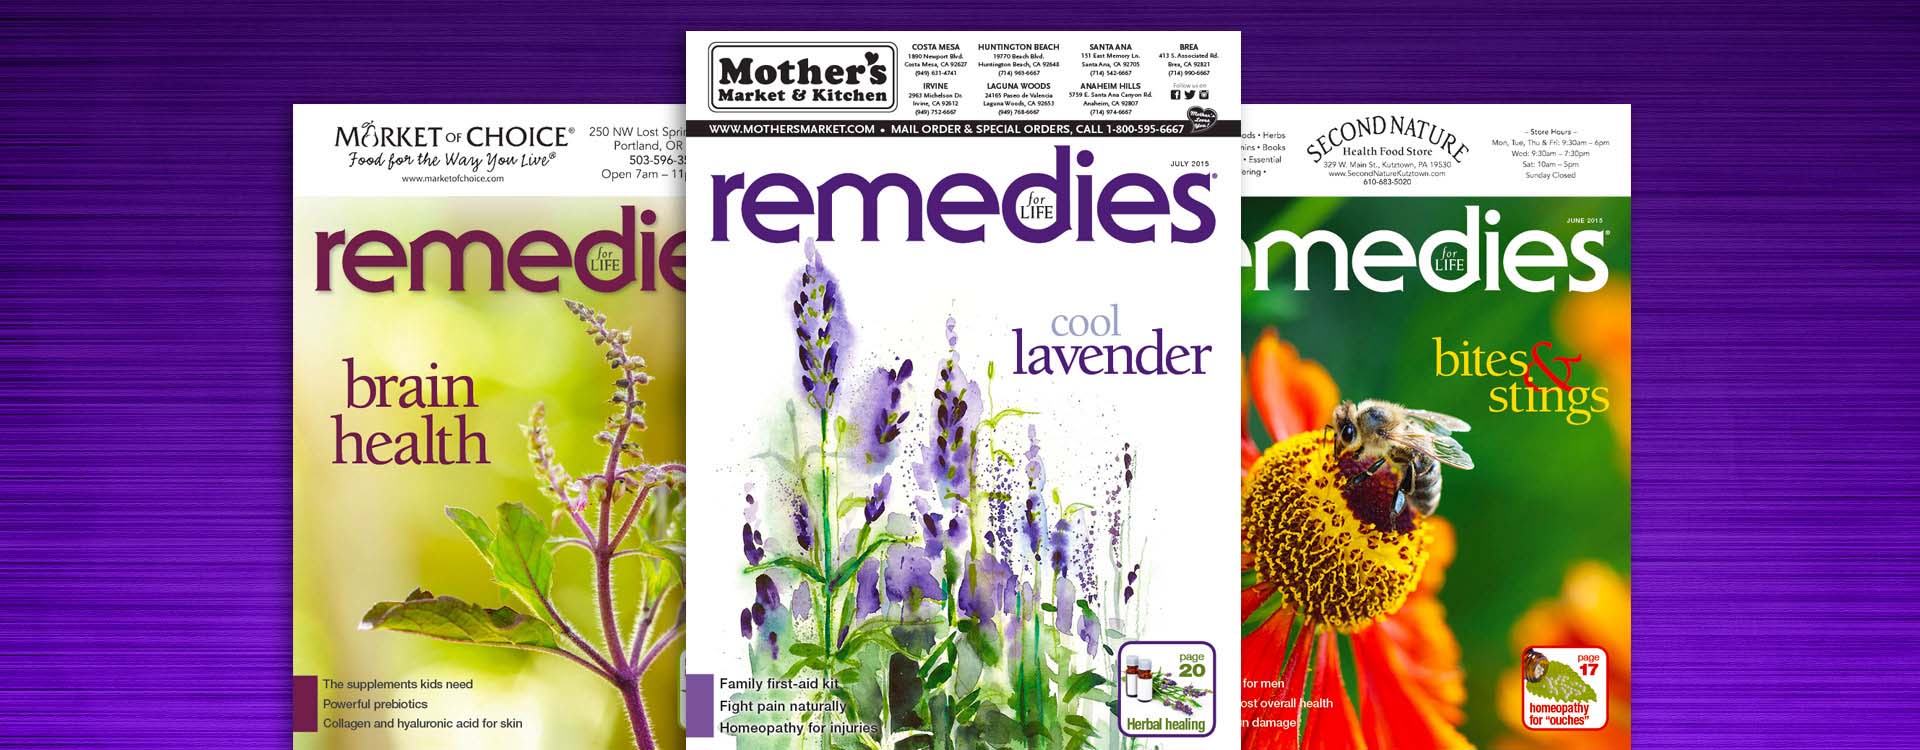 remedies magazine